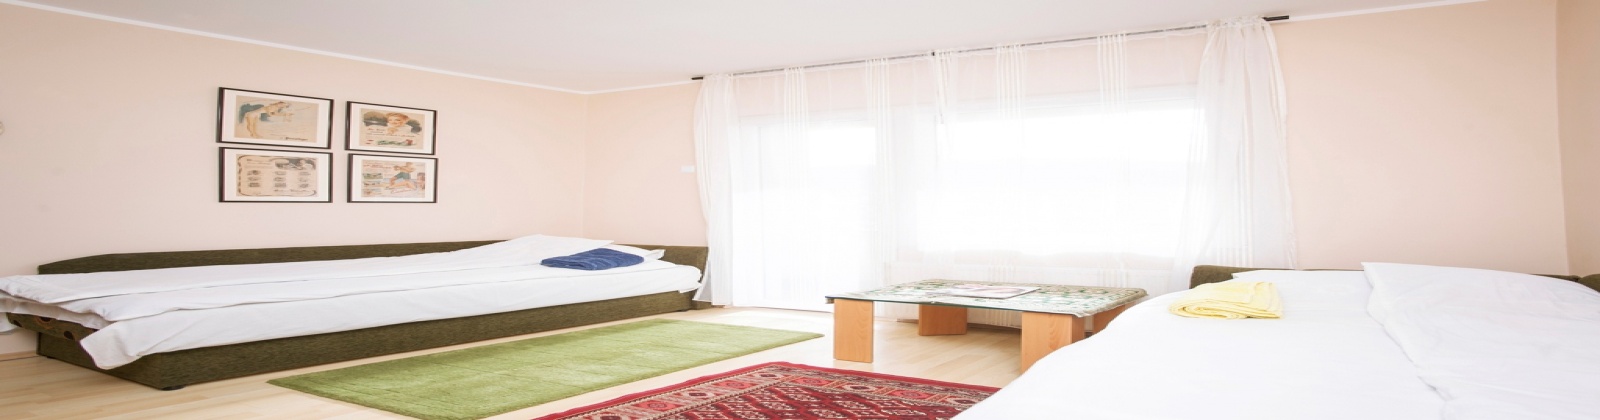 2 Bedrooms, Apartment, Vacation Rental, 1 Bathrooms, Listing ID 1012, Baščaršija, Sarajevo, Bosnia and Herzegovina,